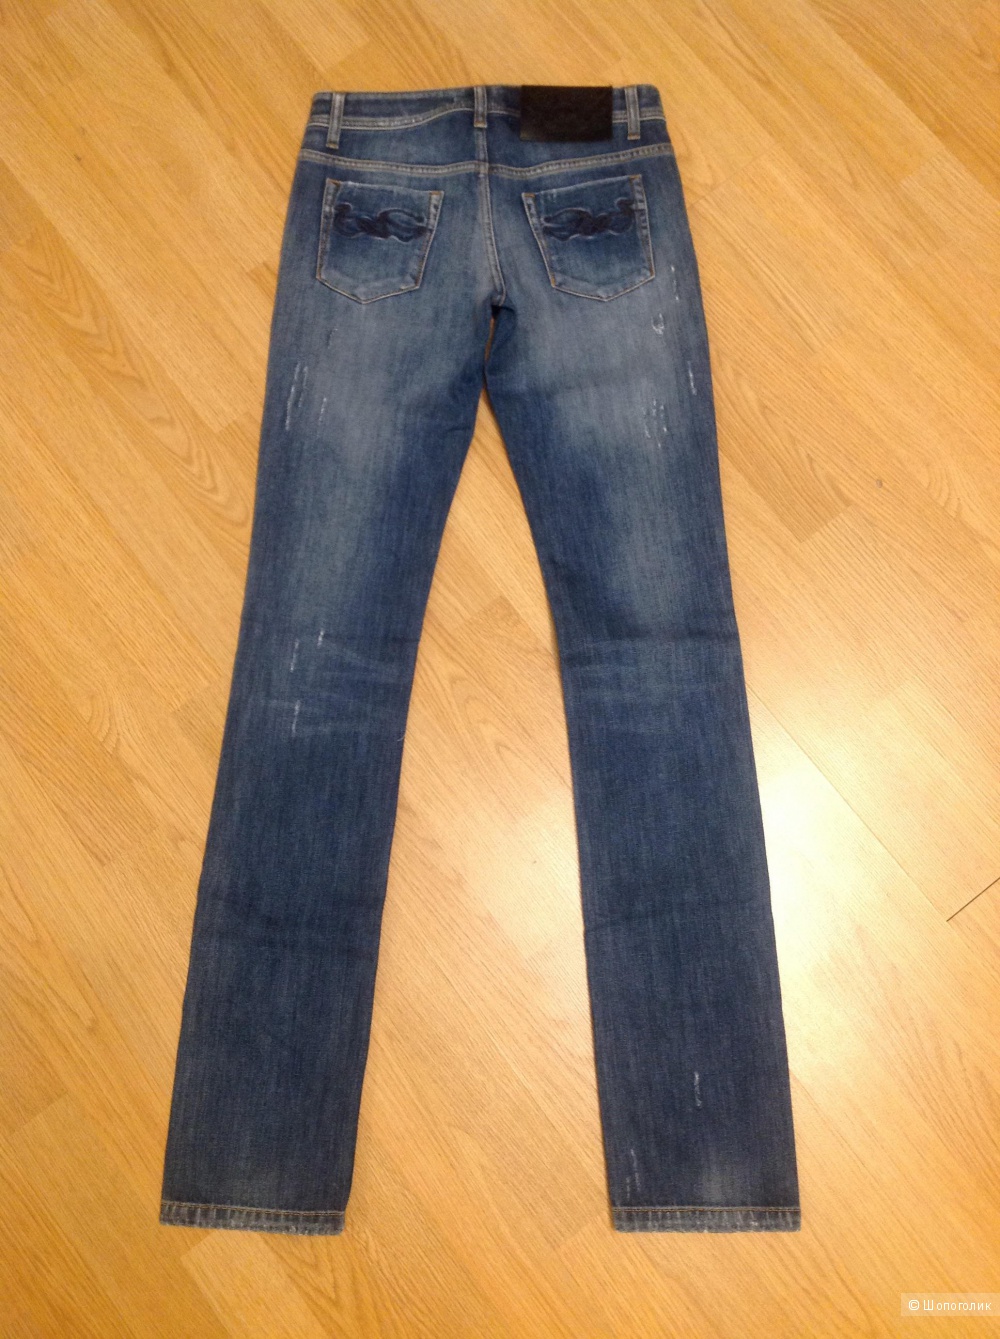 Пристрою новые джинсы Just Cavalli (made in Italy) 26 размера